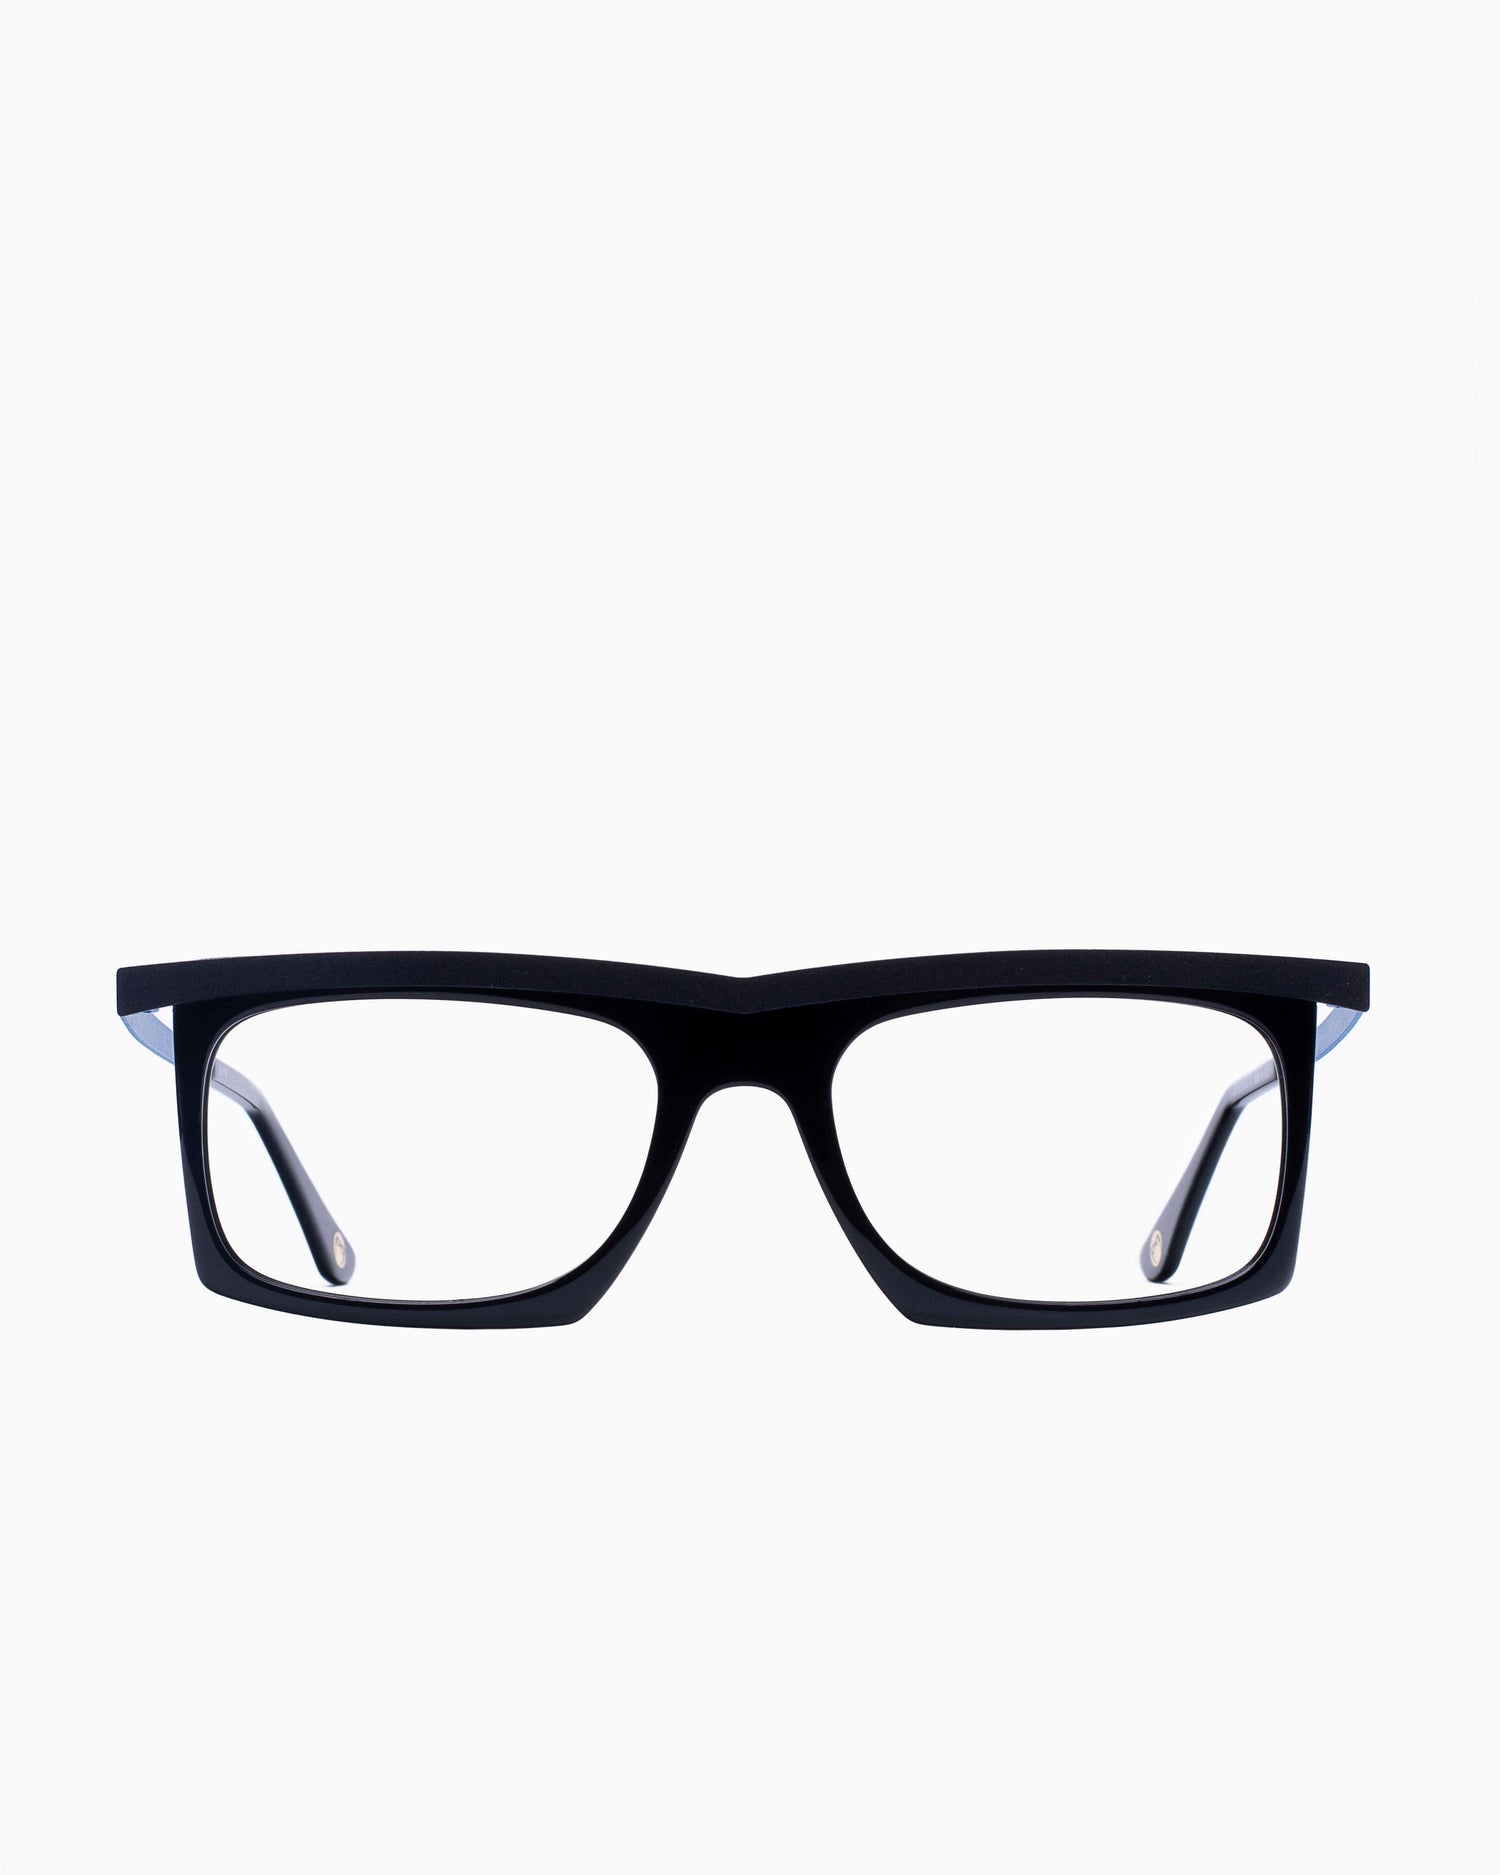 Spectacleeyeworks - Doug - C870 | glasses bar:  Marie-Sophie Dion